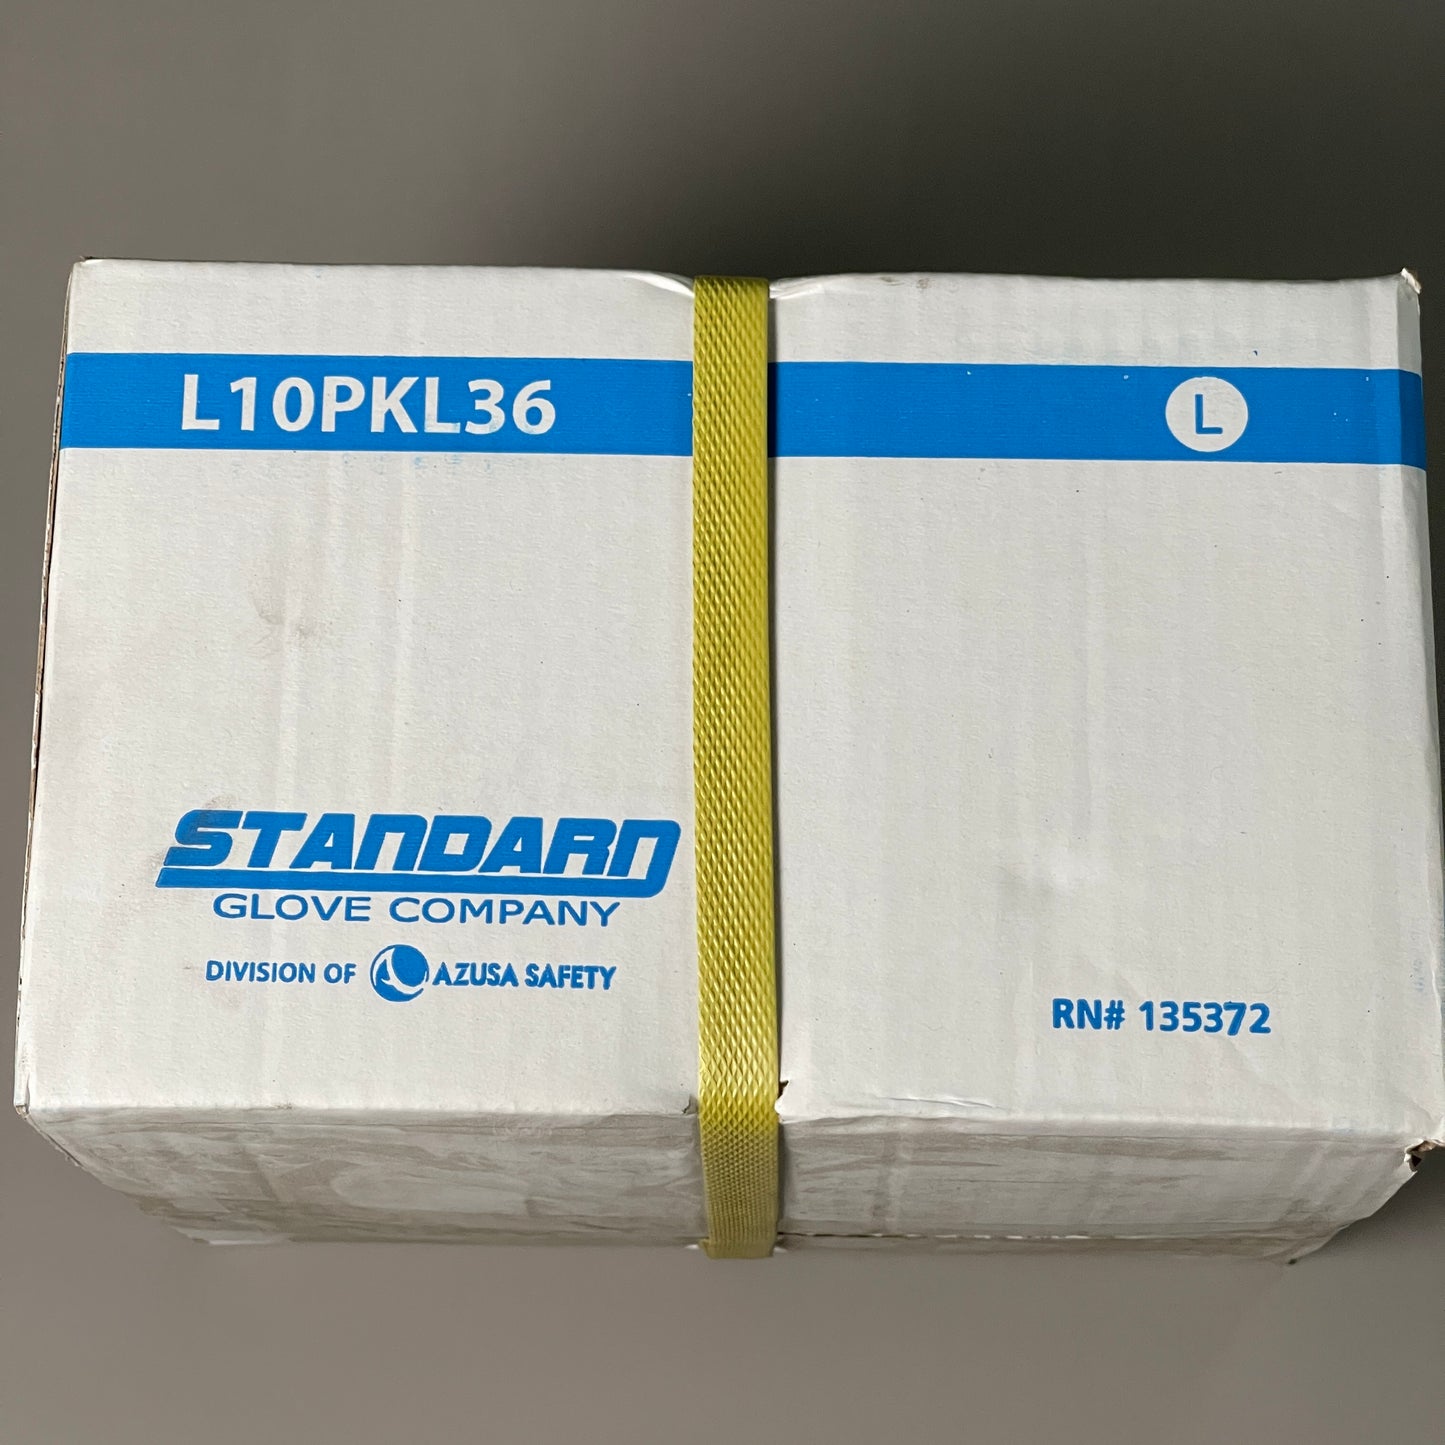 STANDARD GLOVE COMPANY 36 Packs Of 10 Disposable Latex Gloves Sz L - L10PK36 (New)